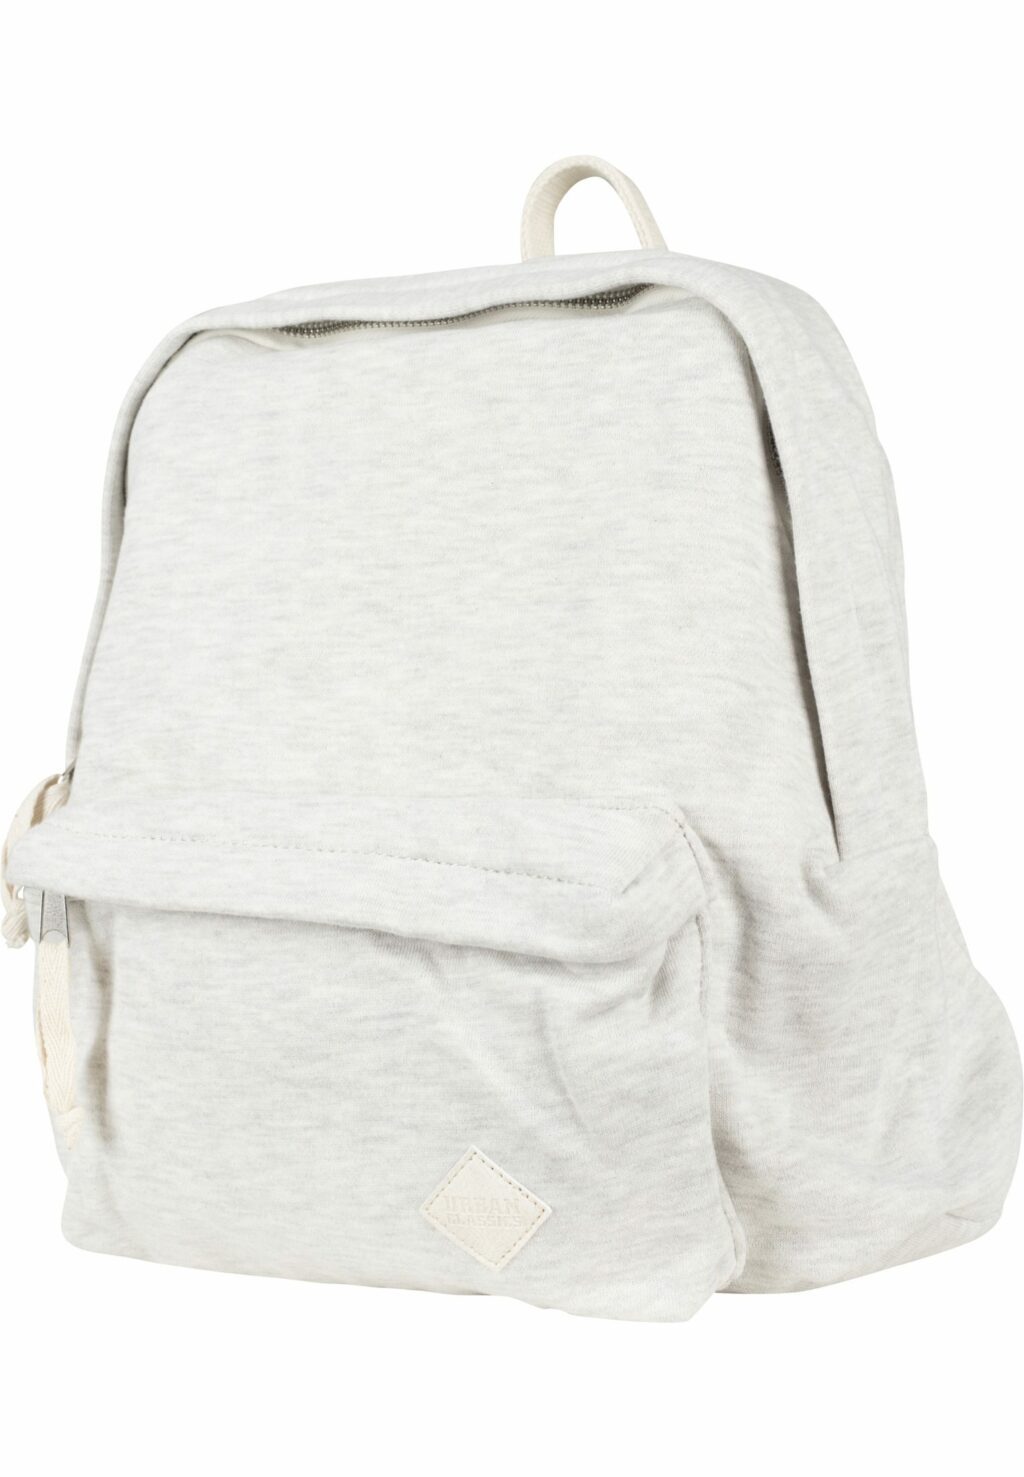 Sweat Backpack offwhite melange/offwhite one TB1695